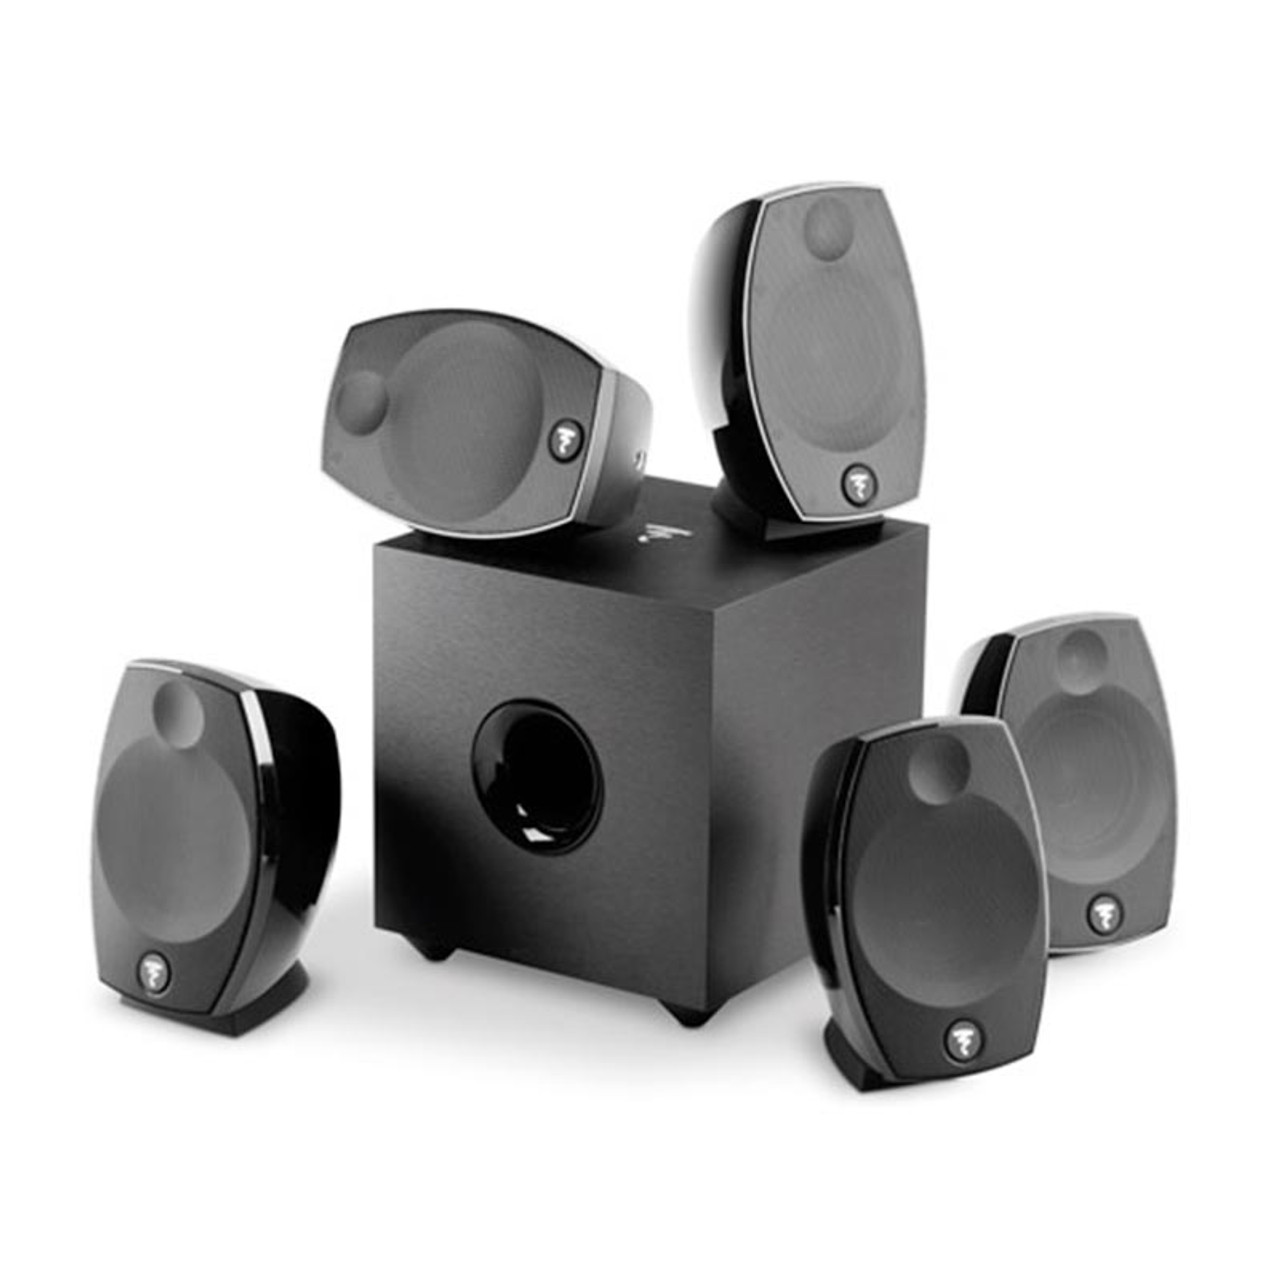 verrassing hotel liter Focal Sib Evo 5.1 Home Theater Speaker System - Open Box - Creative Audio